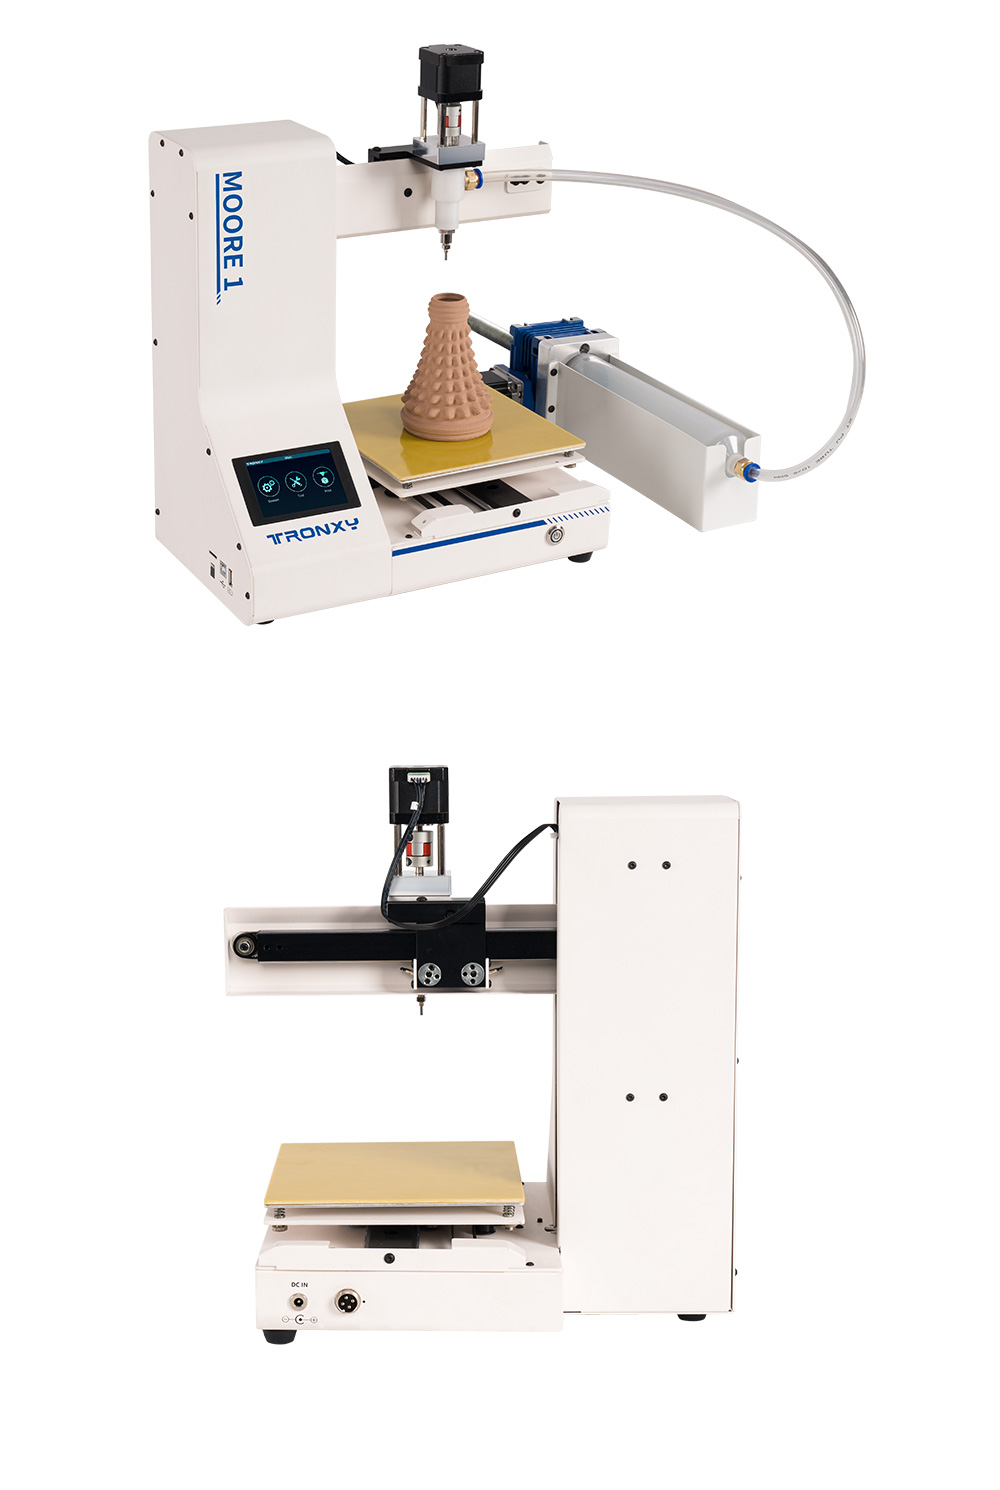 Tronxy Moore 1 Mini Clay 3D Printer, ความเร็วในการพิมพ์ 40 มม./วินาที, การพิมพ์ต่อ, TMC2209, 180*180*180 มม.